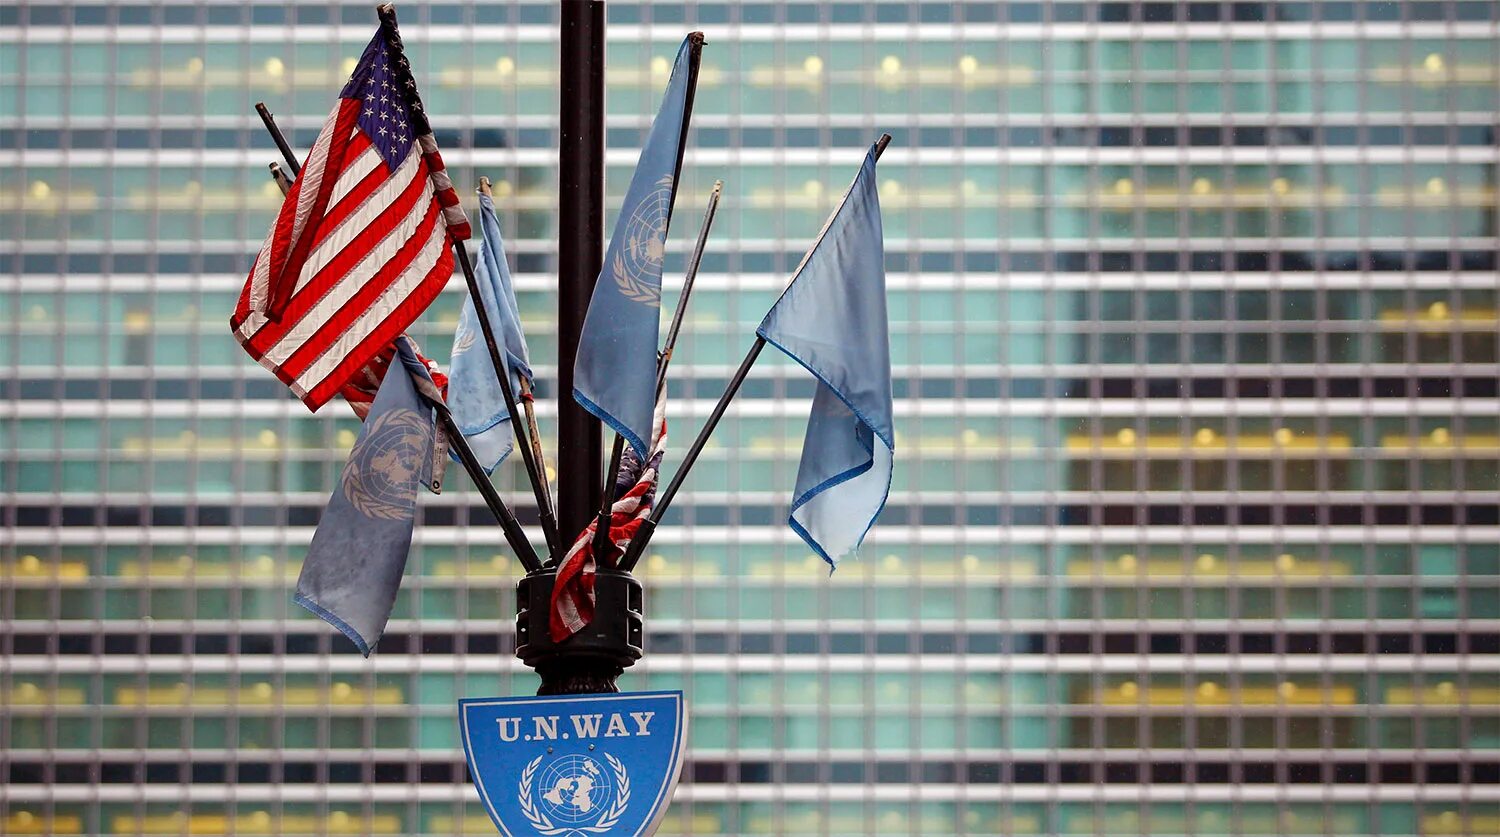 Штаб ООН В Нью-Йорке. Штаб квартира ООН. Здание ООН В Нью-Йорке. Здание ООН В США. Организации оон в сша